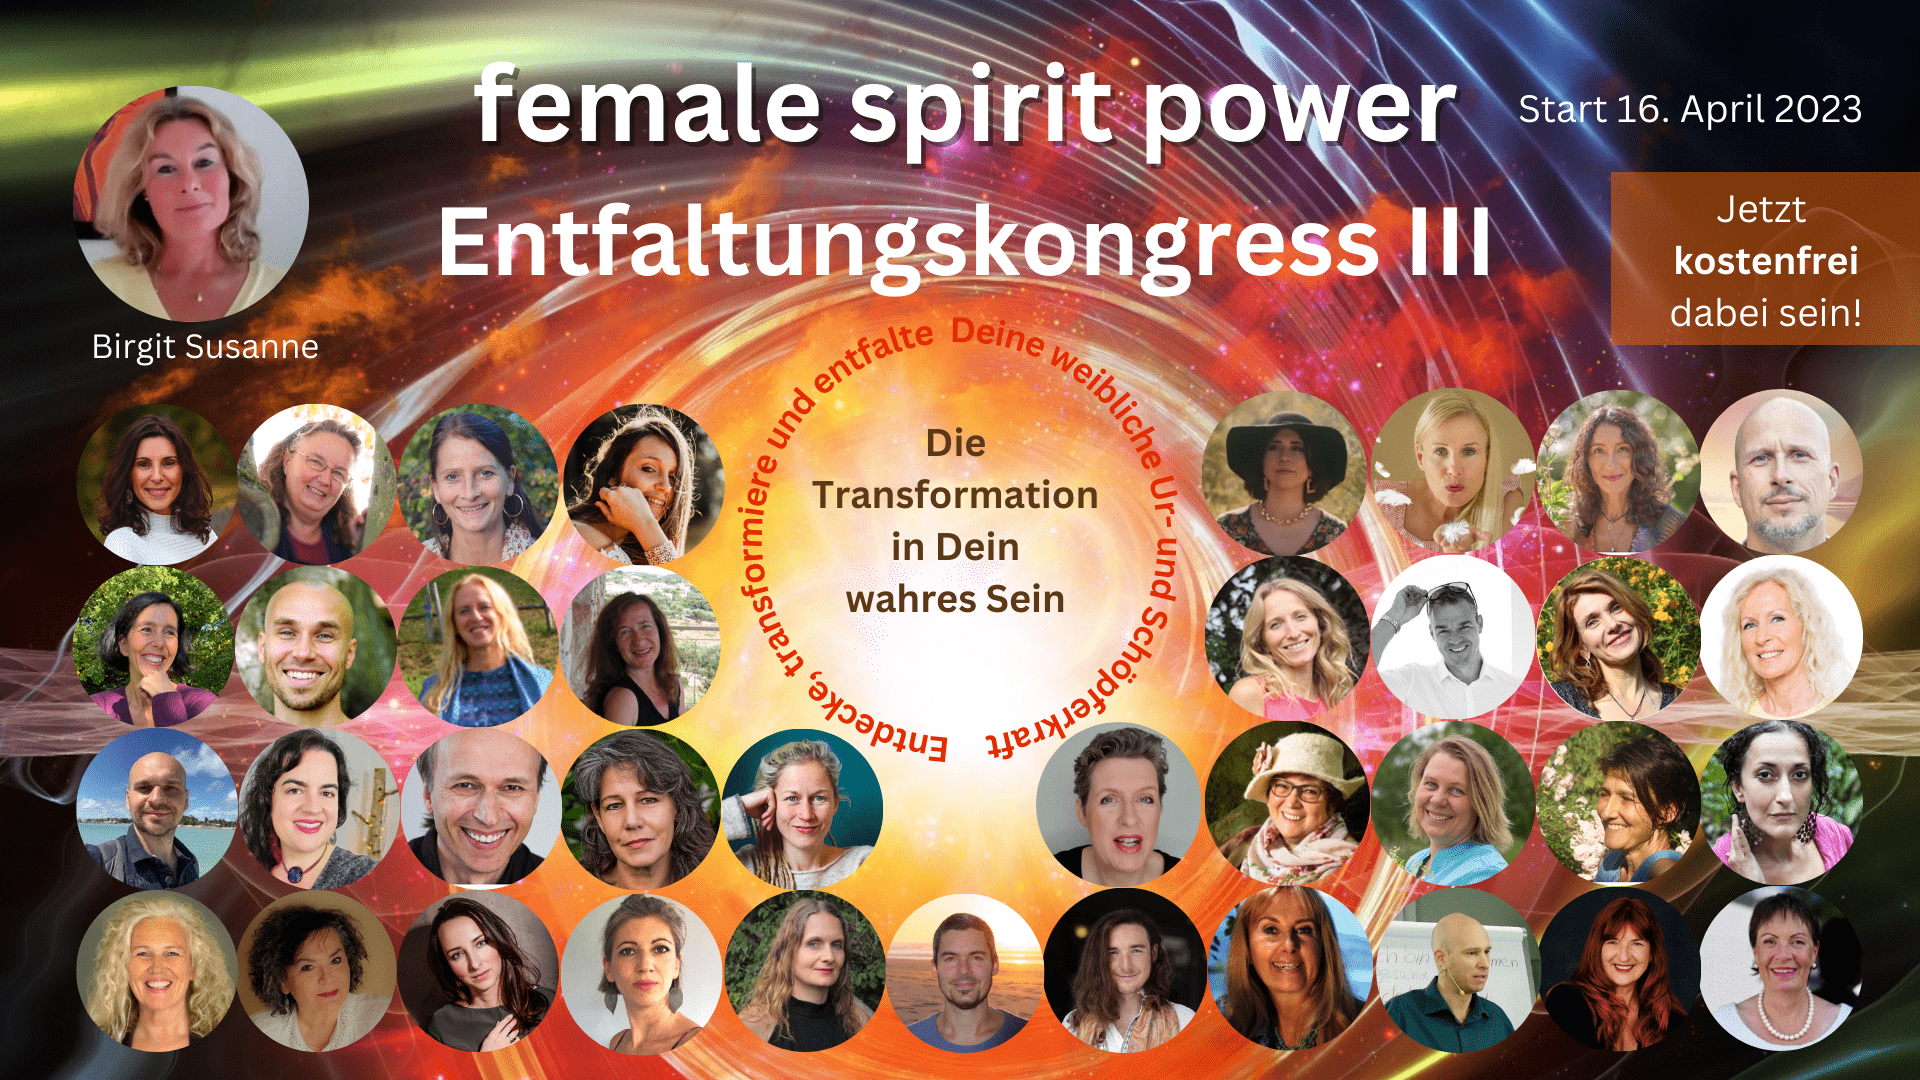 female spirit power Entfaltungskongress III 2023